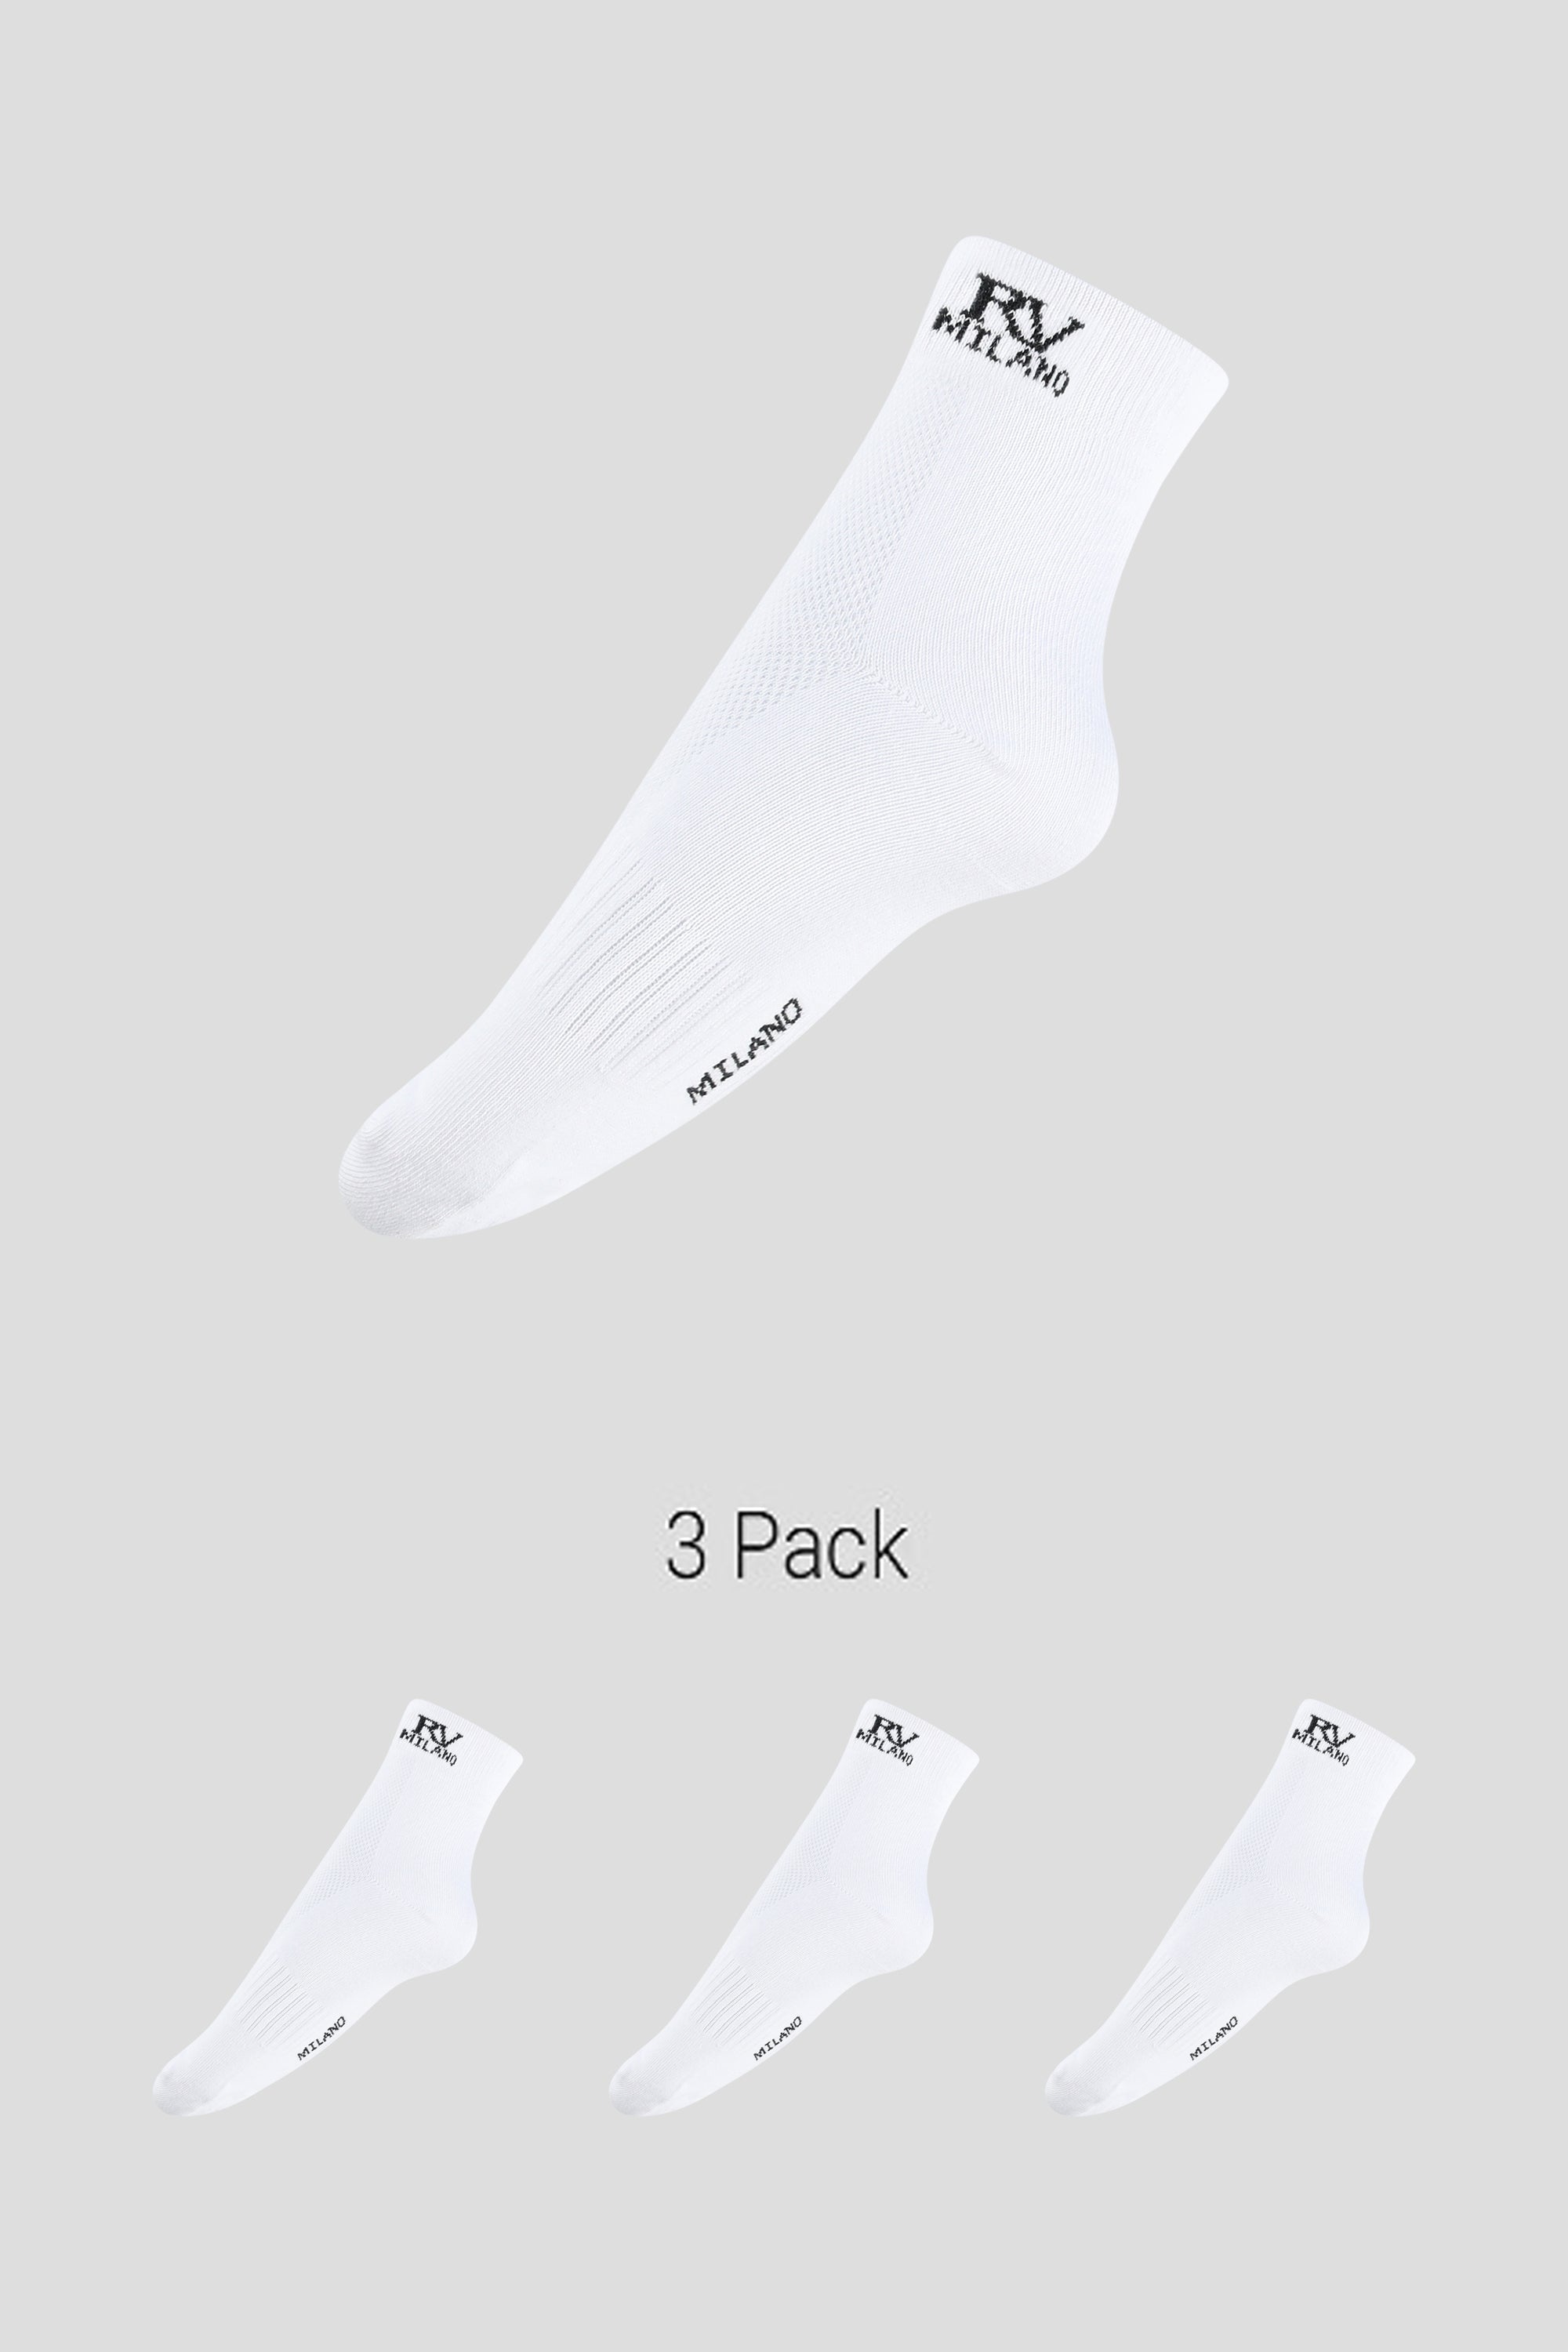 RVA 3 pack crew socks